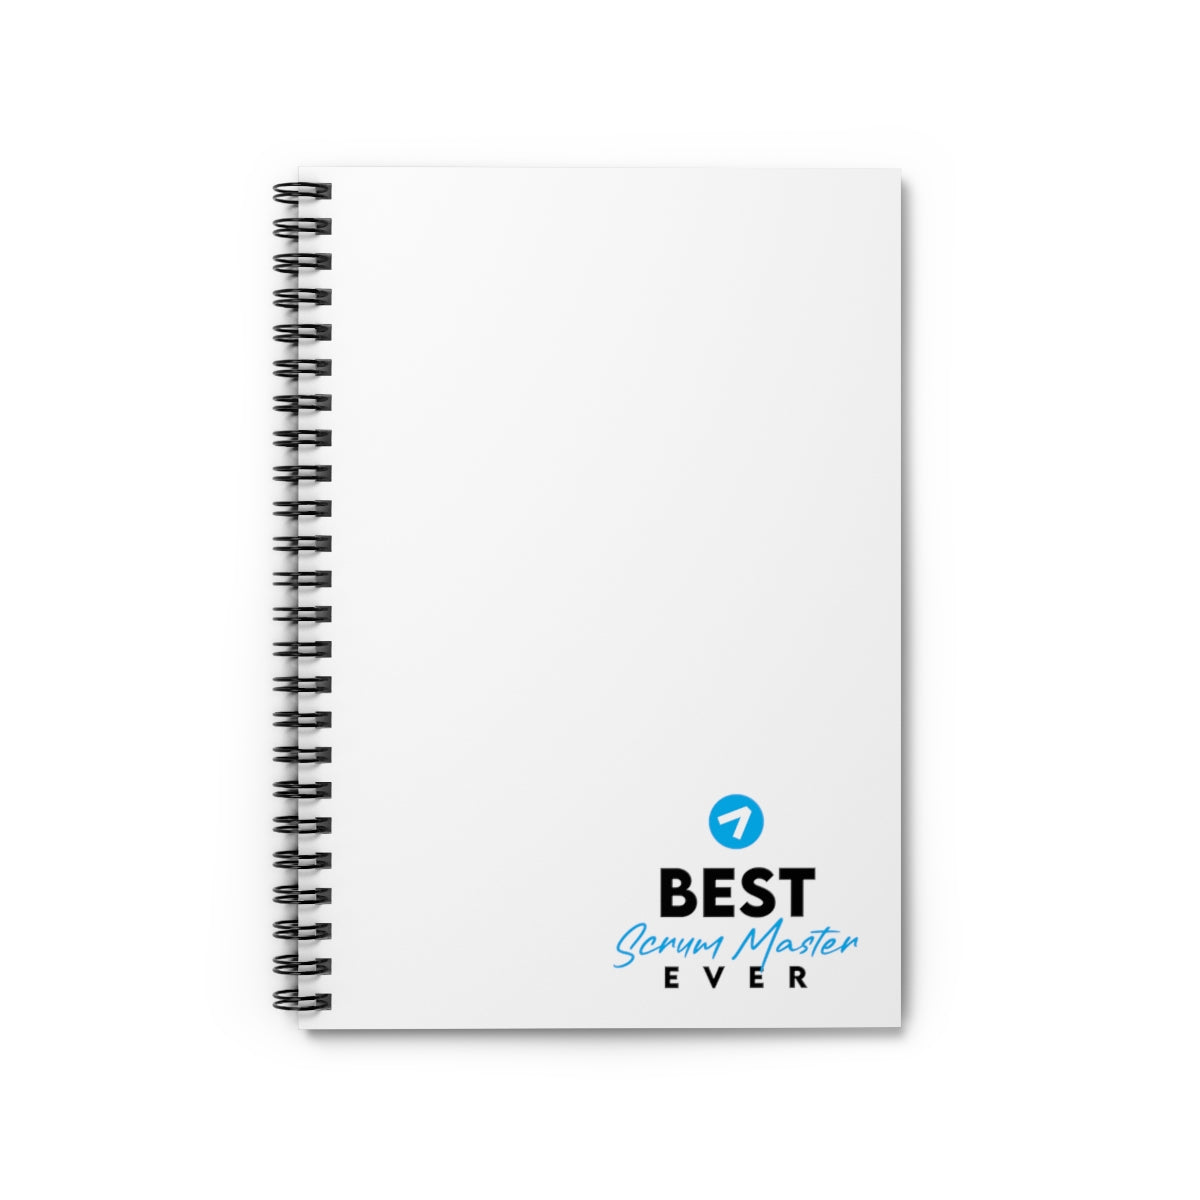 Best Scrum Master ever - Light blue - Spiral Notebook - Ruled Line